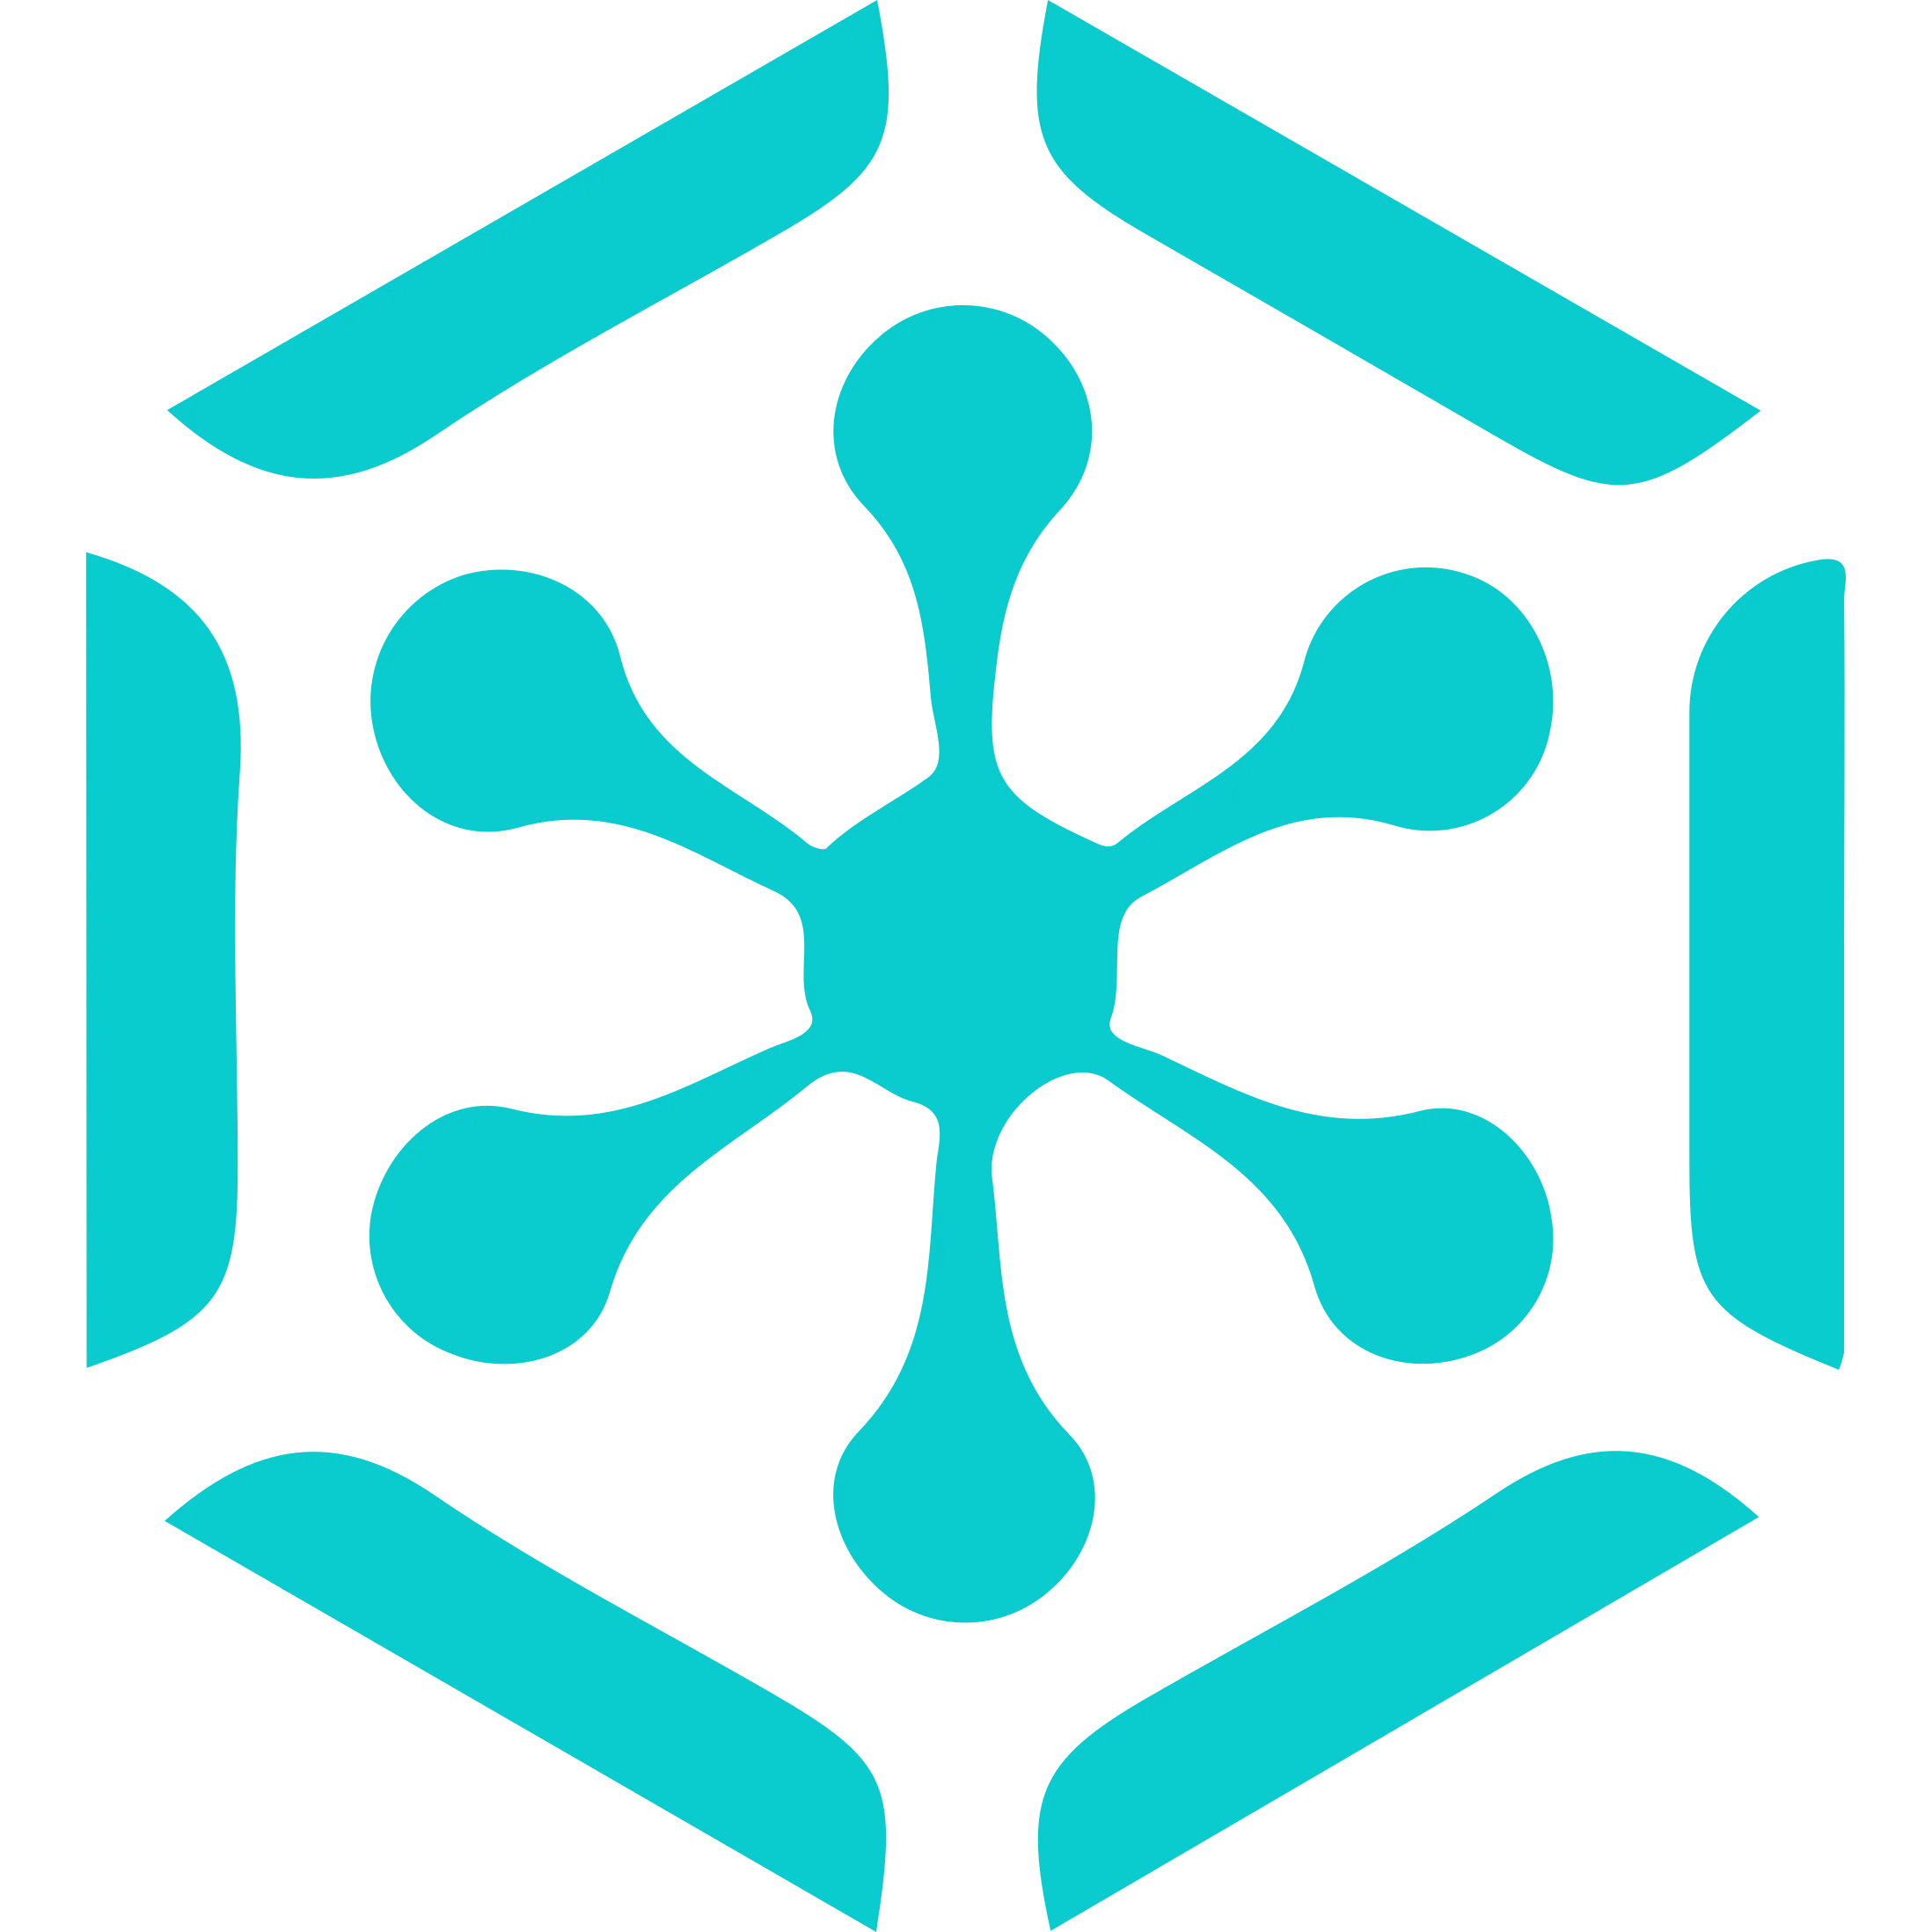 Ruff logo in png format